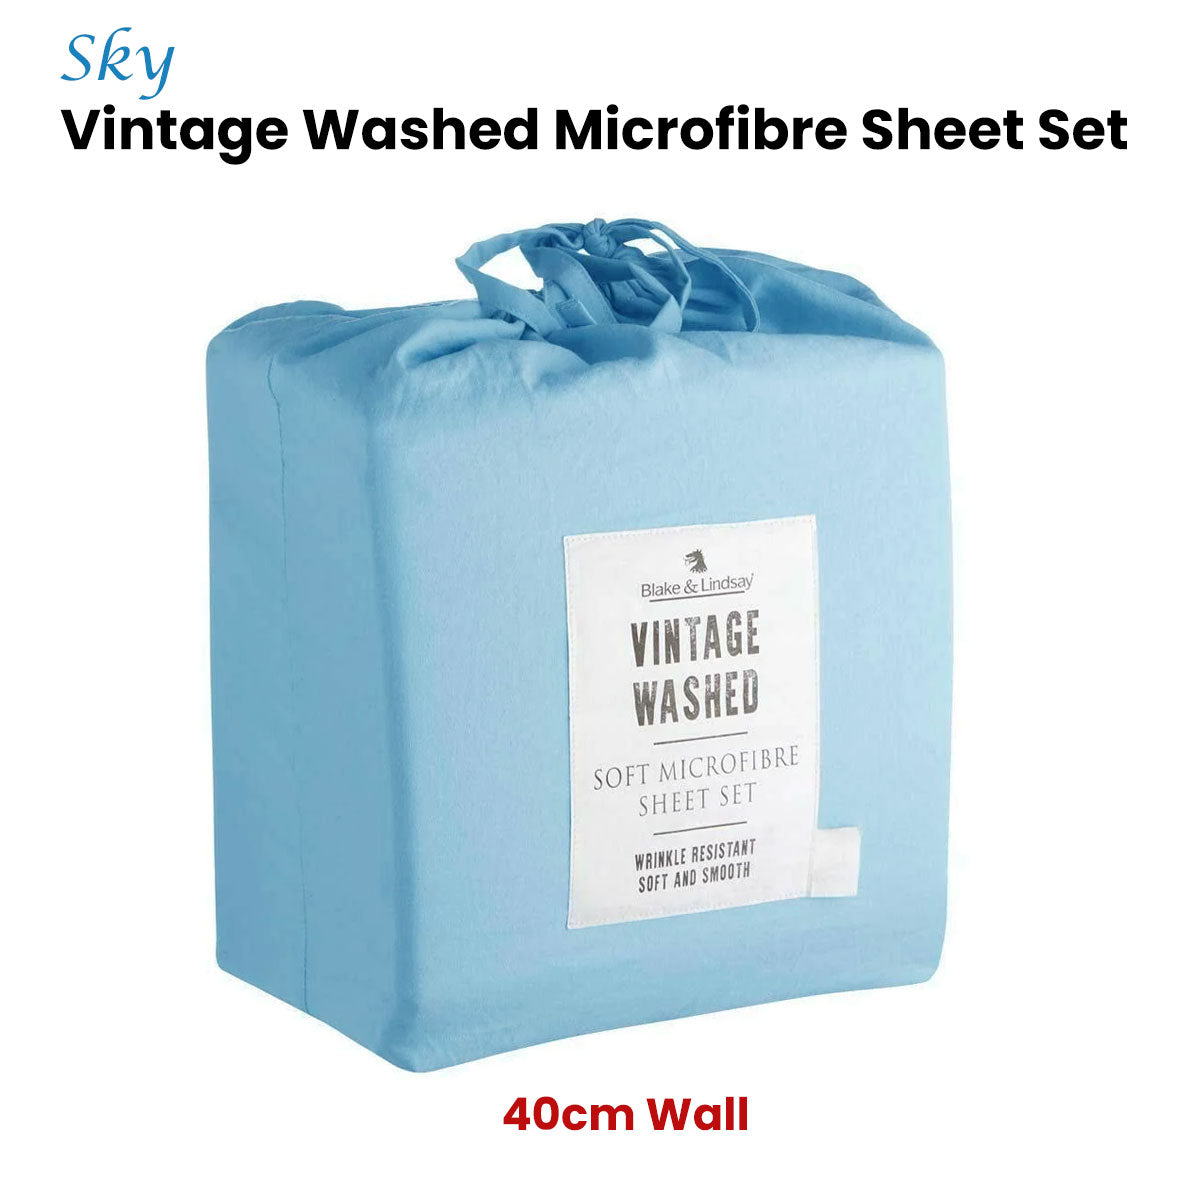 Blake & Lindsay Sky Vintage Washed Microfibre Sheet Set 40cm Wall Double